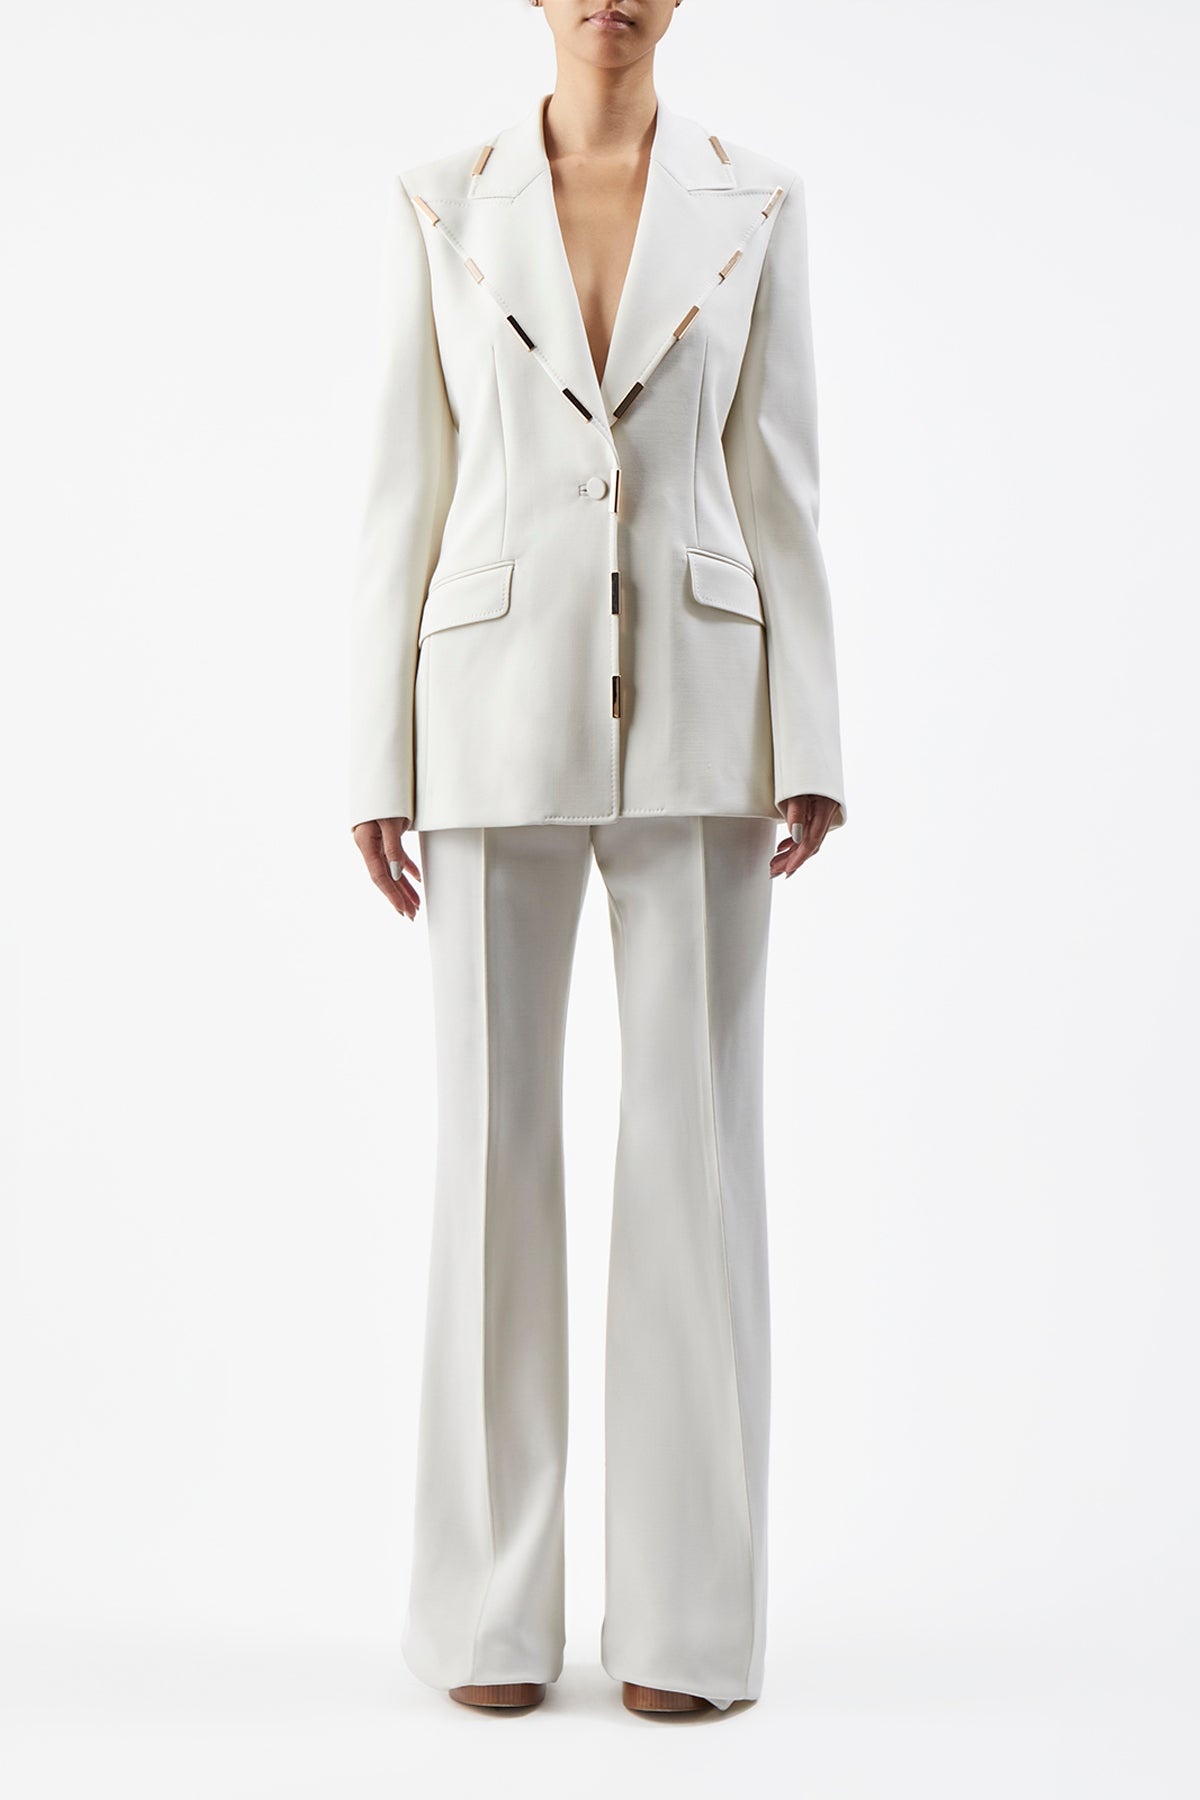 Leiva Blazer in Ivory Sportswear Wool with Gold Bars - 3